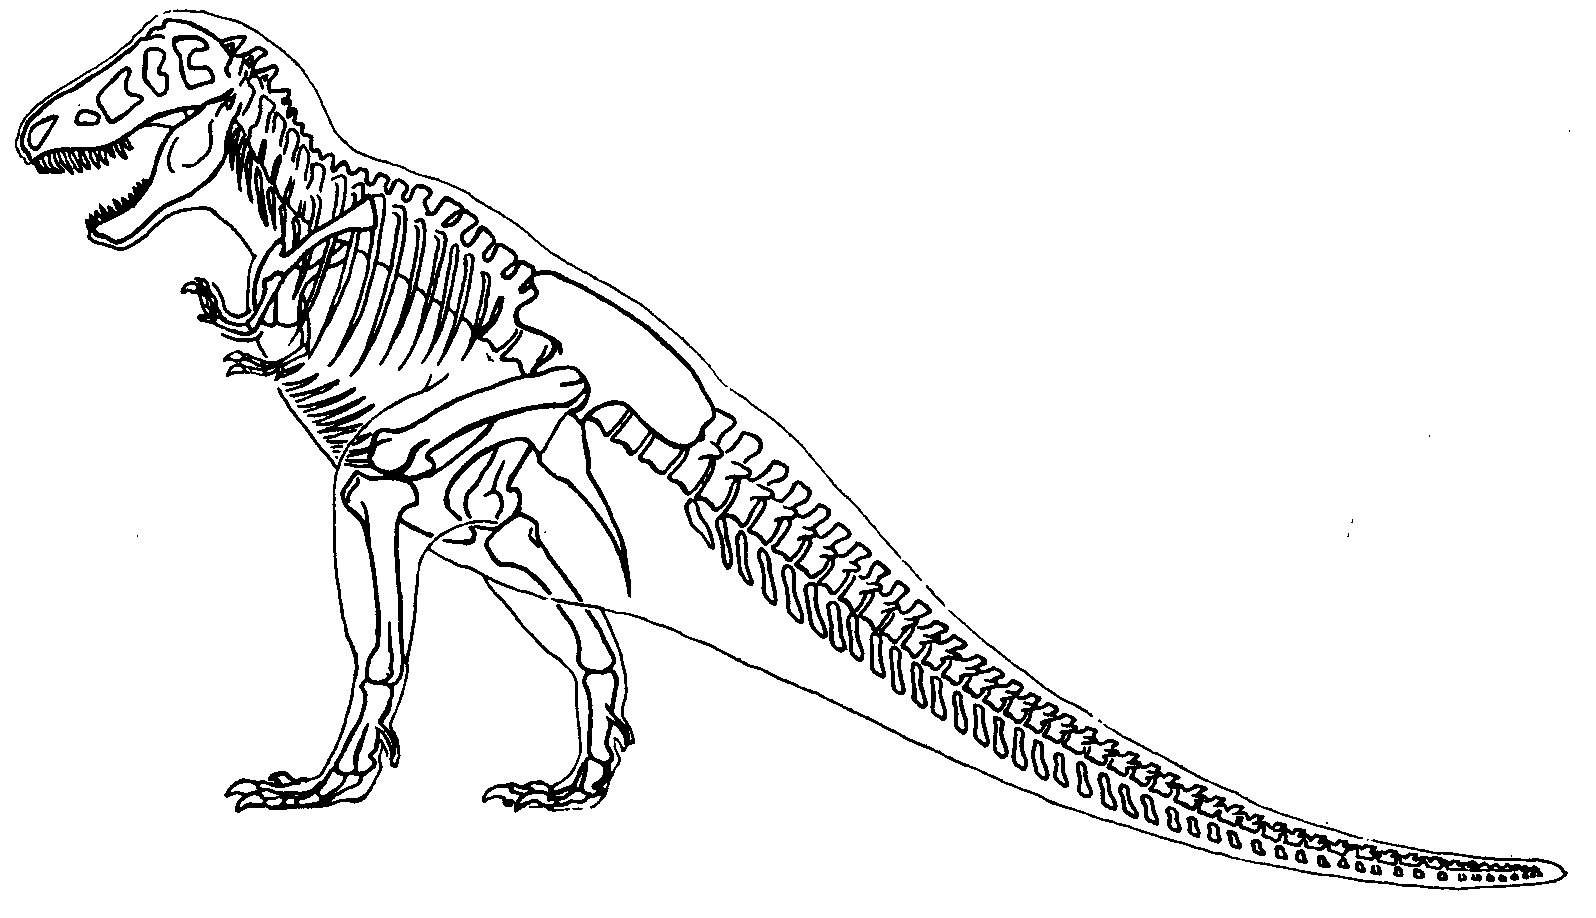 Tyrannosaurus Rex Skeleton Drawing at PaintingValley.com | Explore